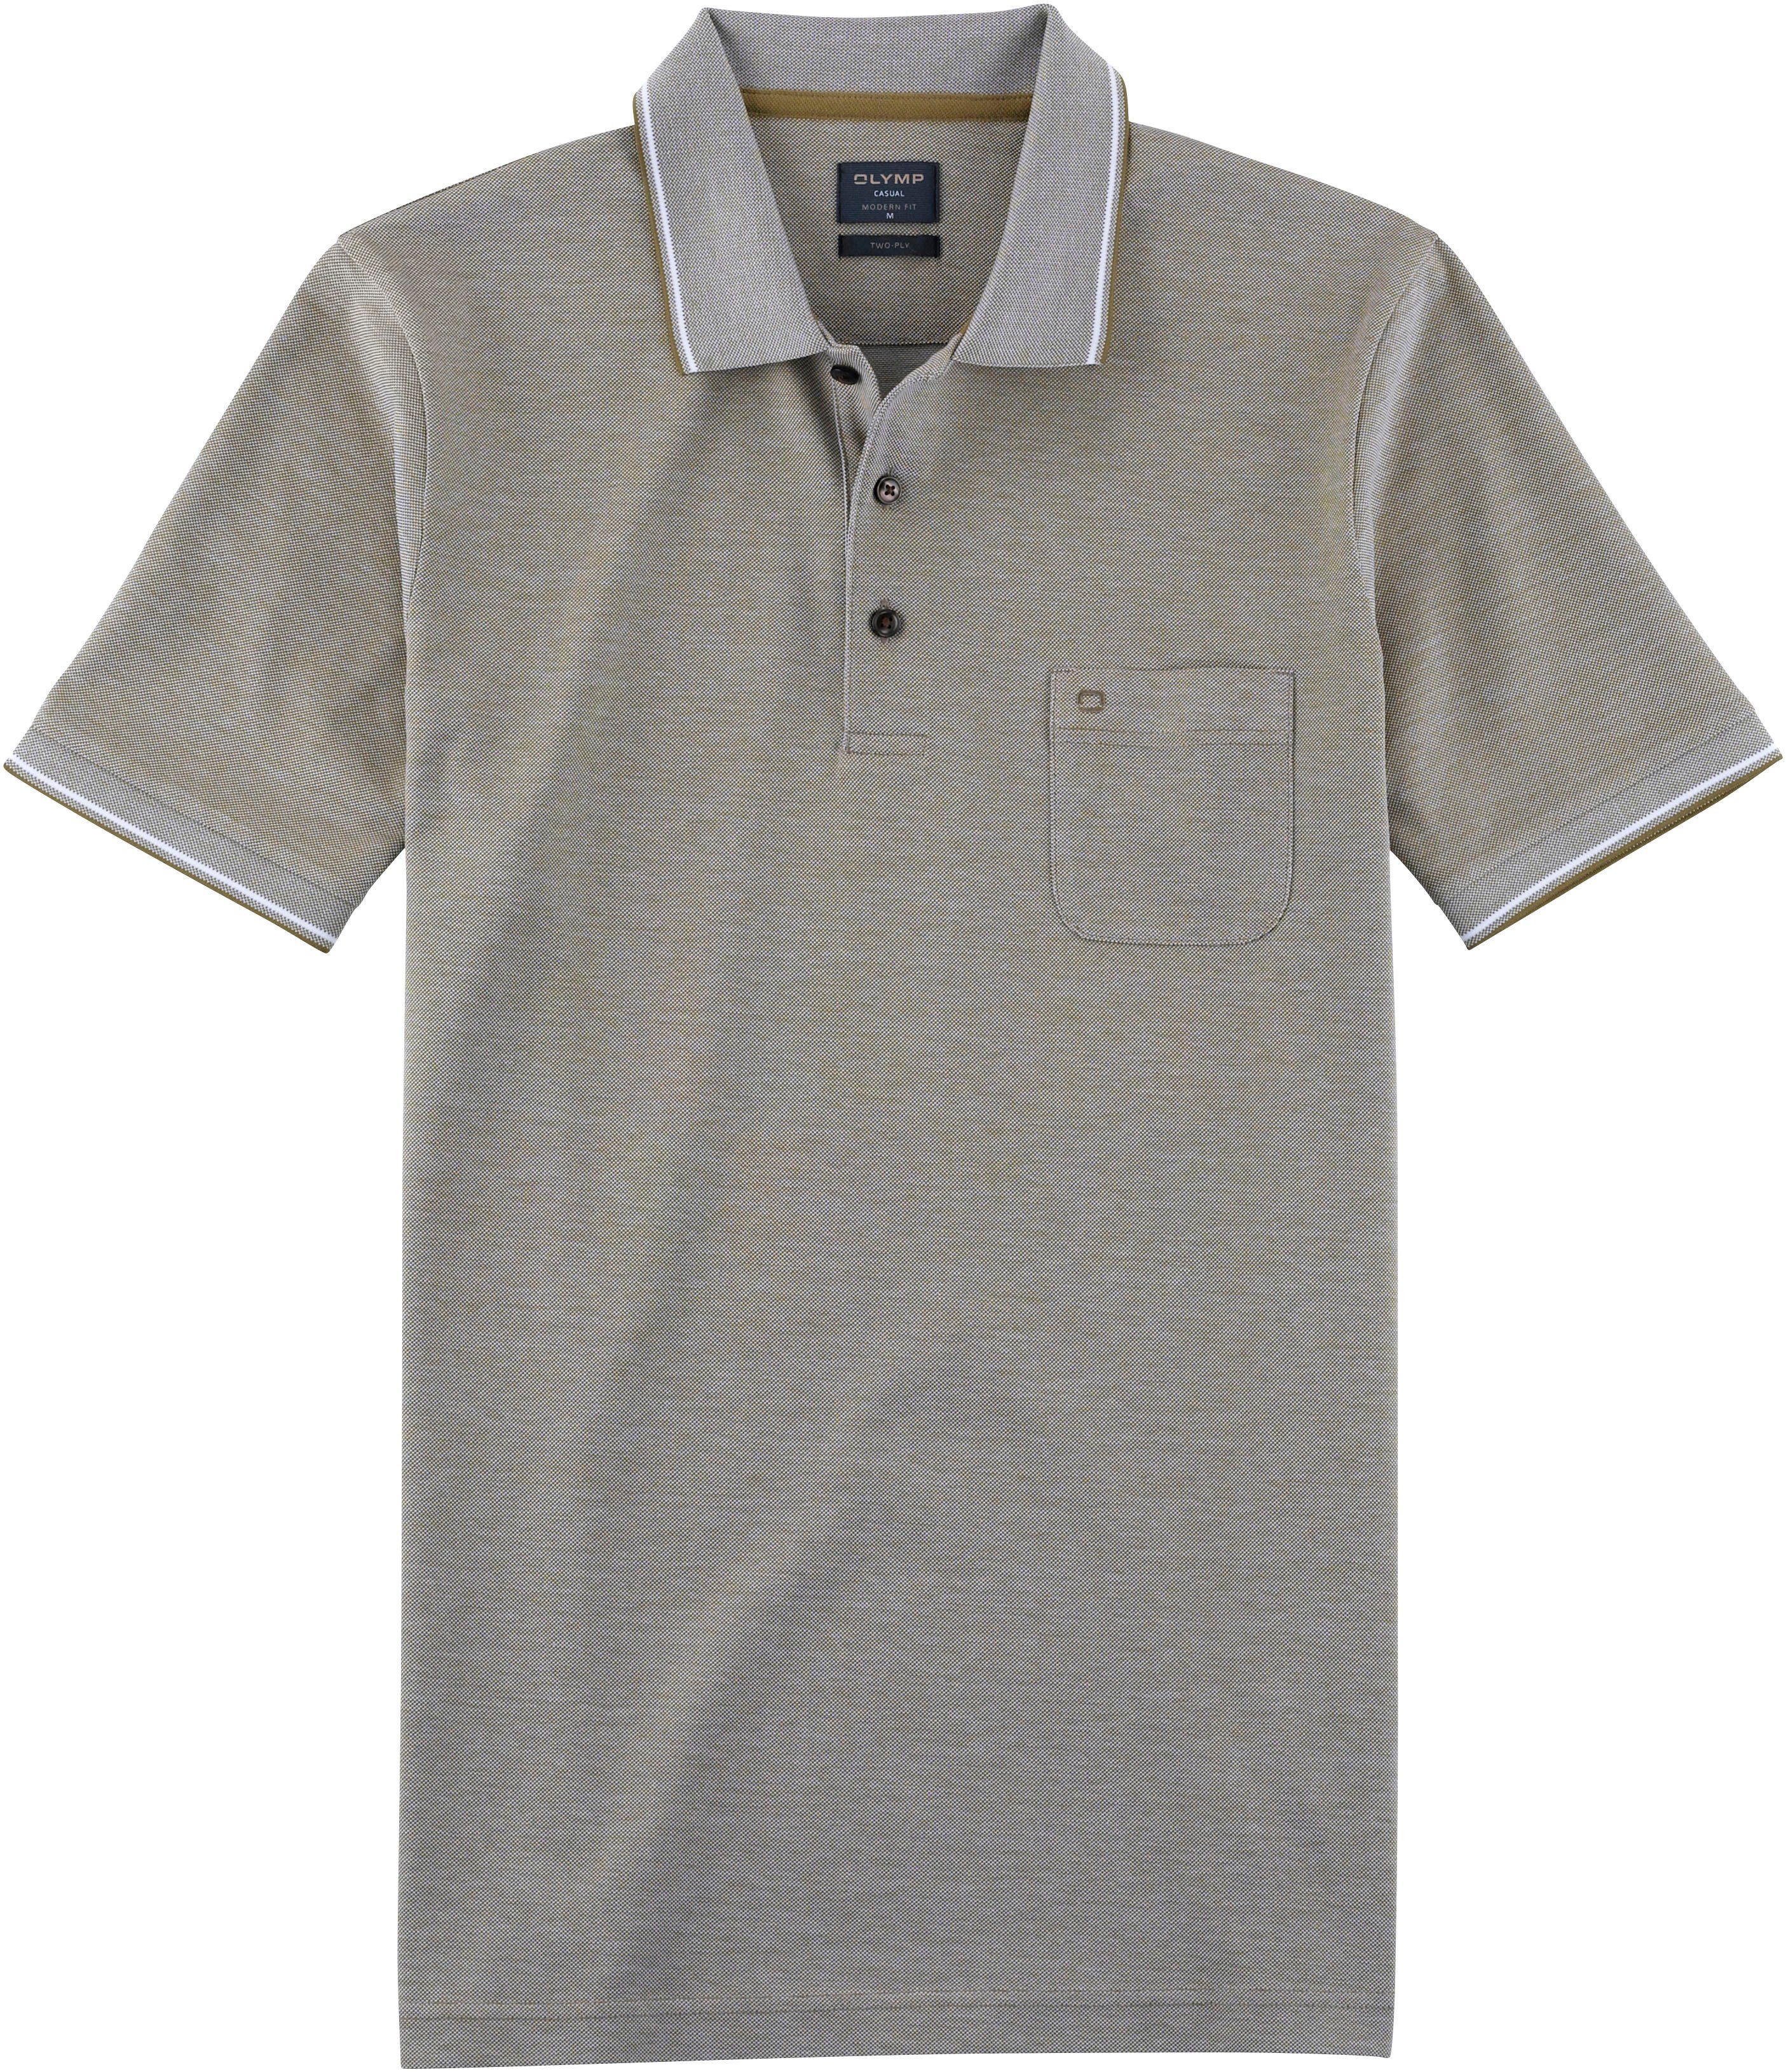 OLYMP Luxor fit modern hochwertiger in Piqué-Qualität Poloshirt khaki